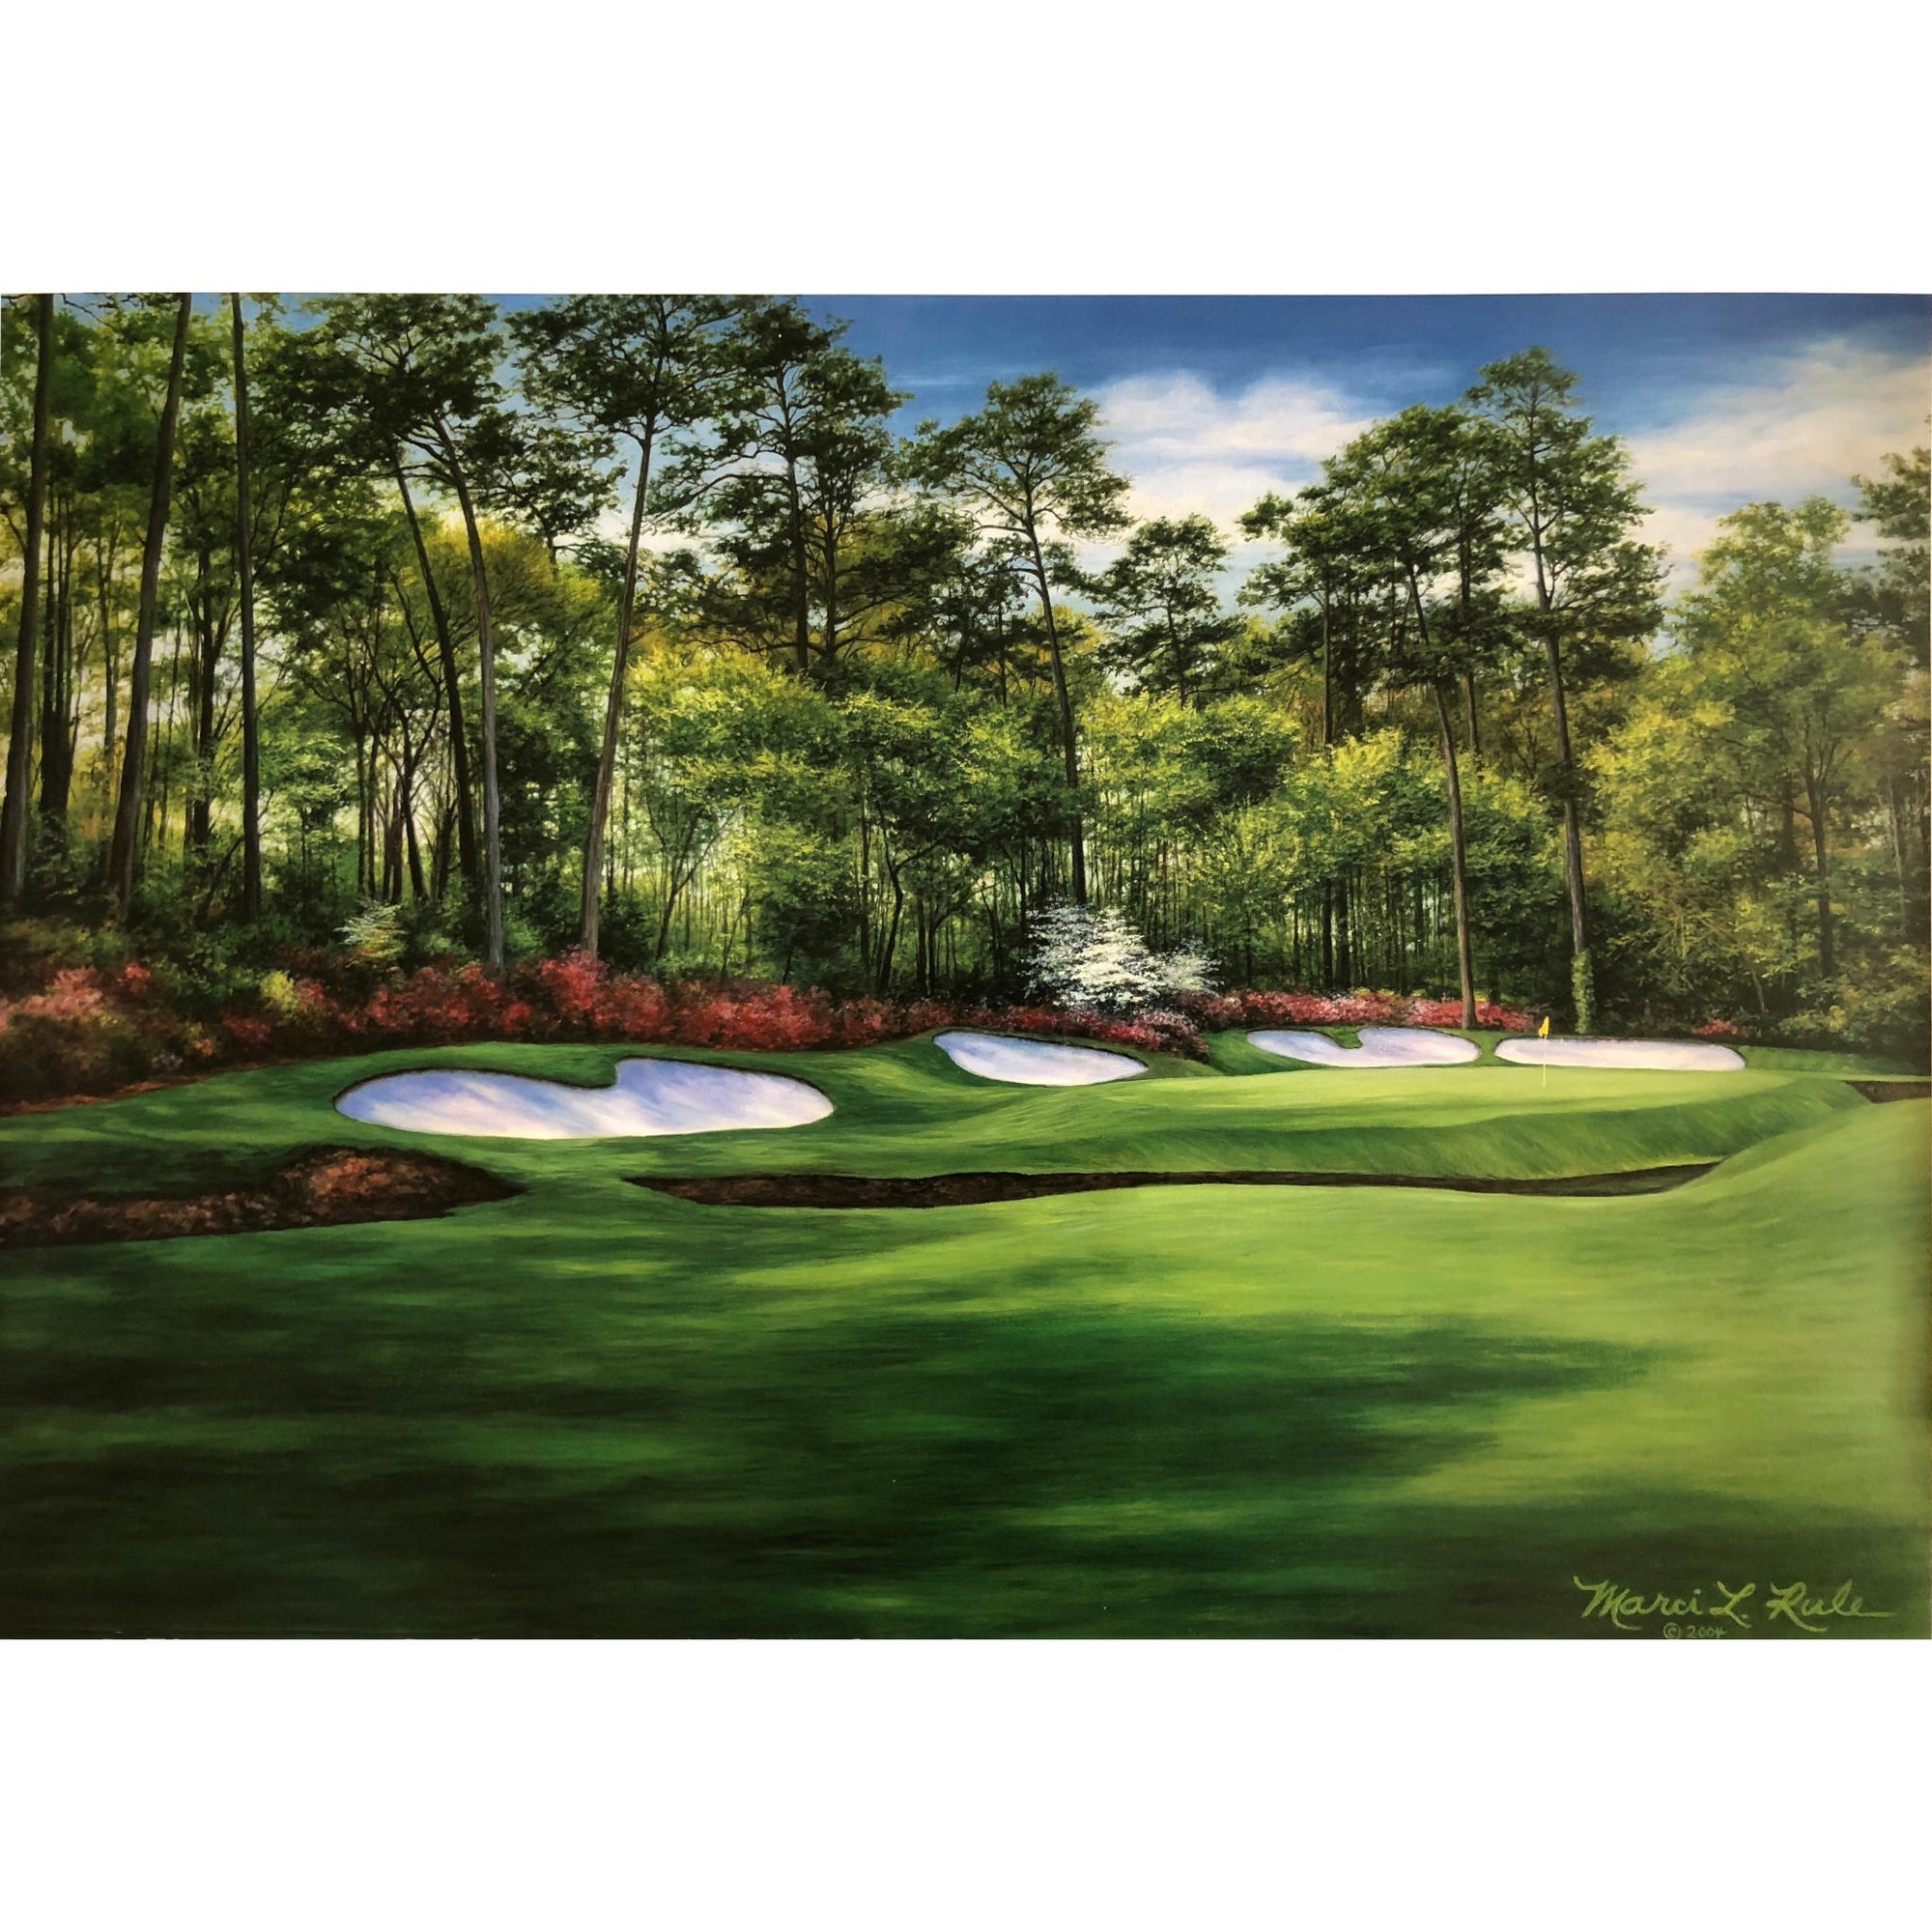 East Aurora Country Club, Our Best Printed Artwork designs - Golf